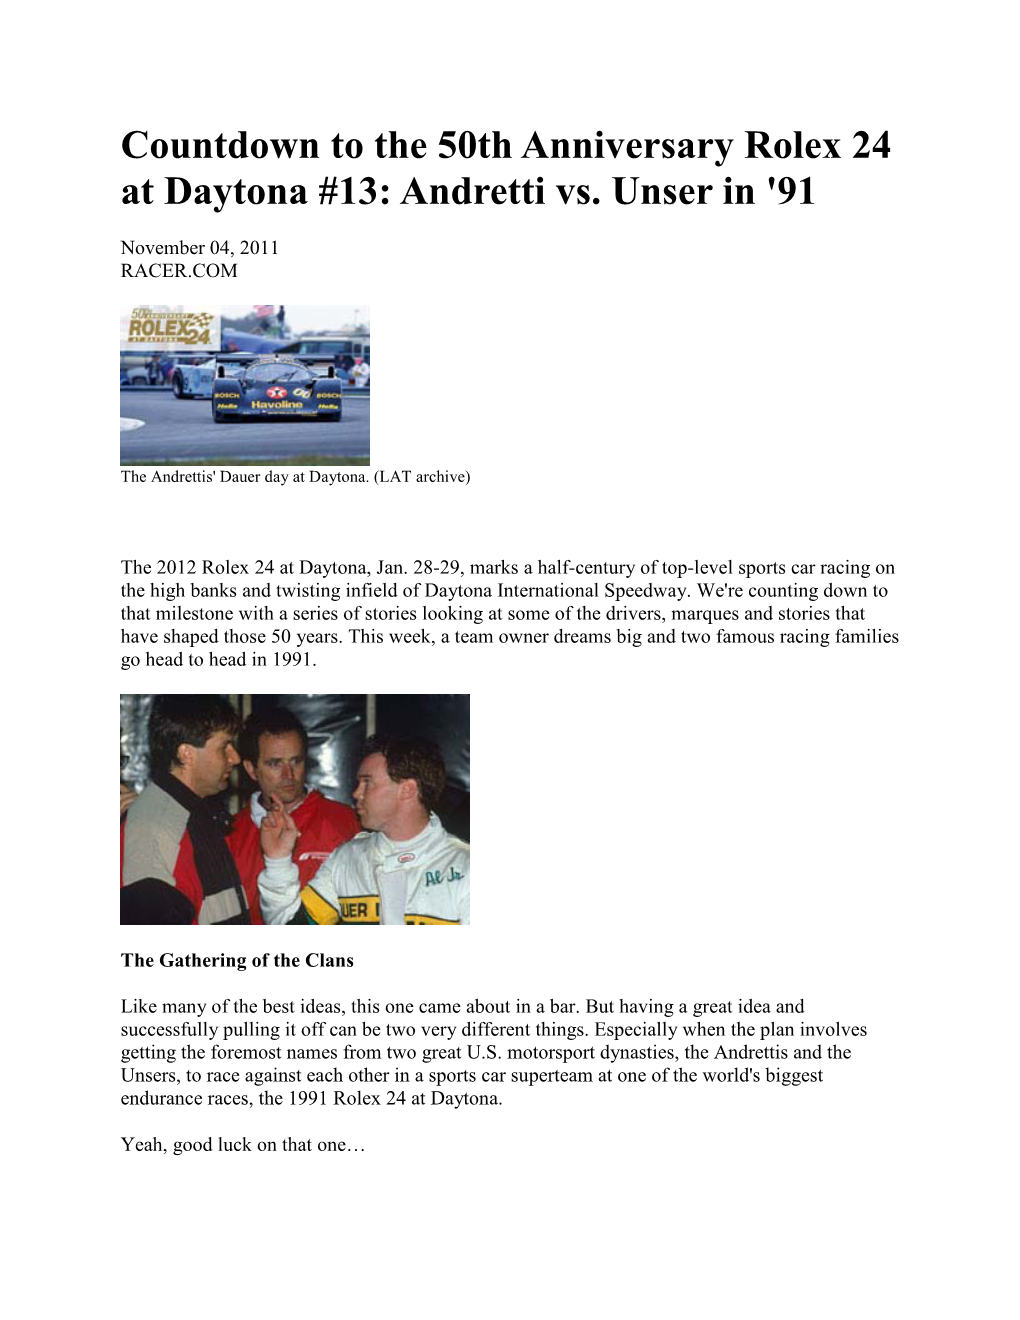 Countdown to the 50Th Anniversary Rolex 24 at Daytona #13: Andretti Vs